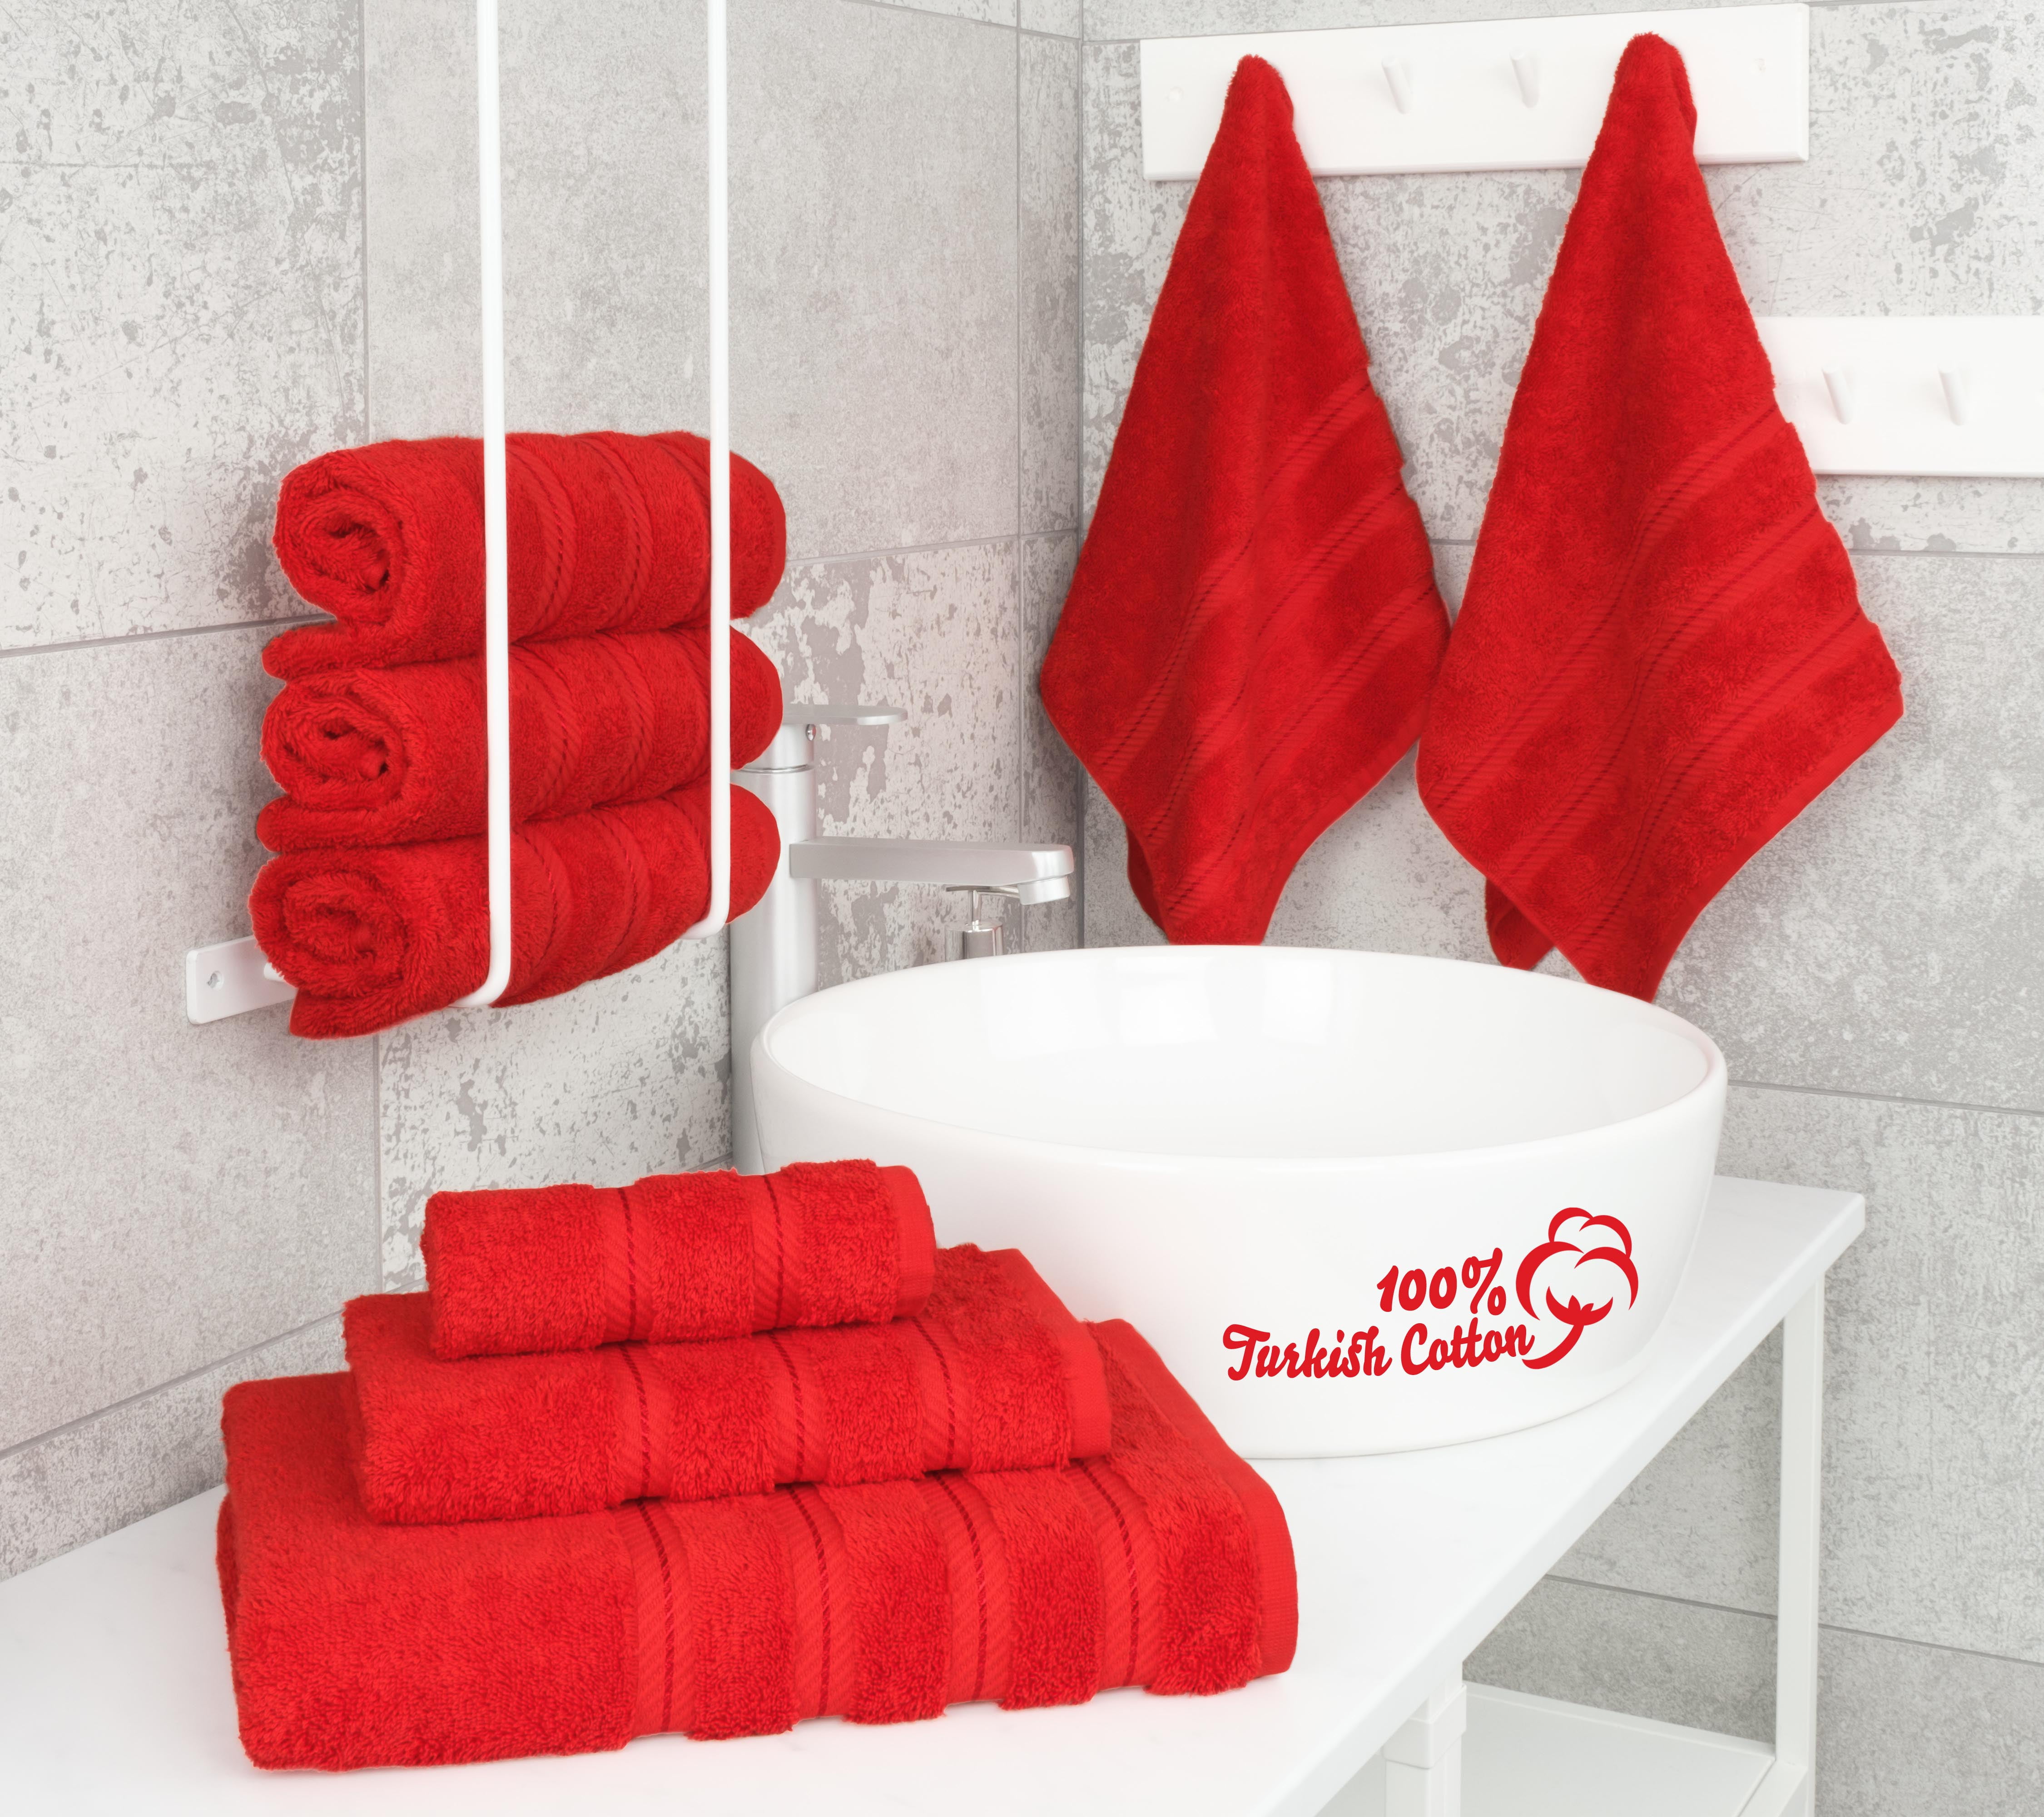 6pc LaRue Turkish Cotton Bath Towel Set Green - Makroteks